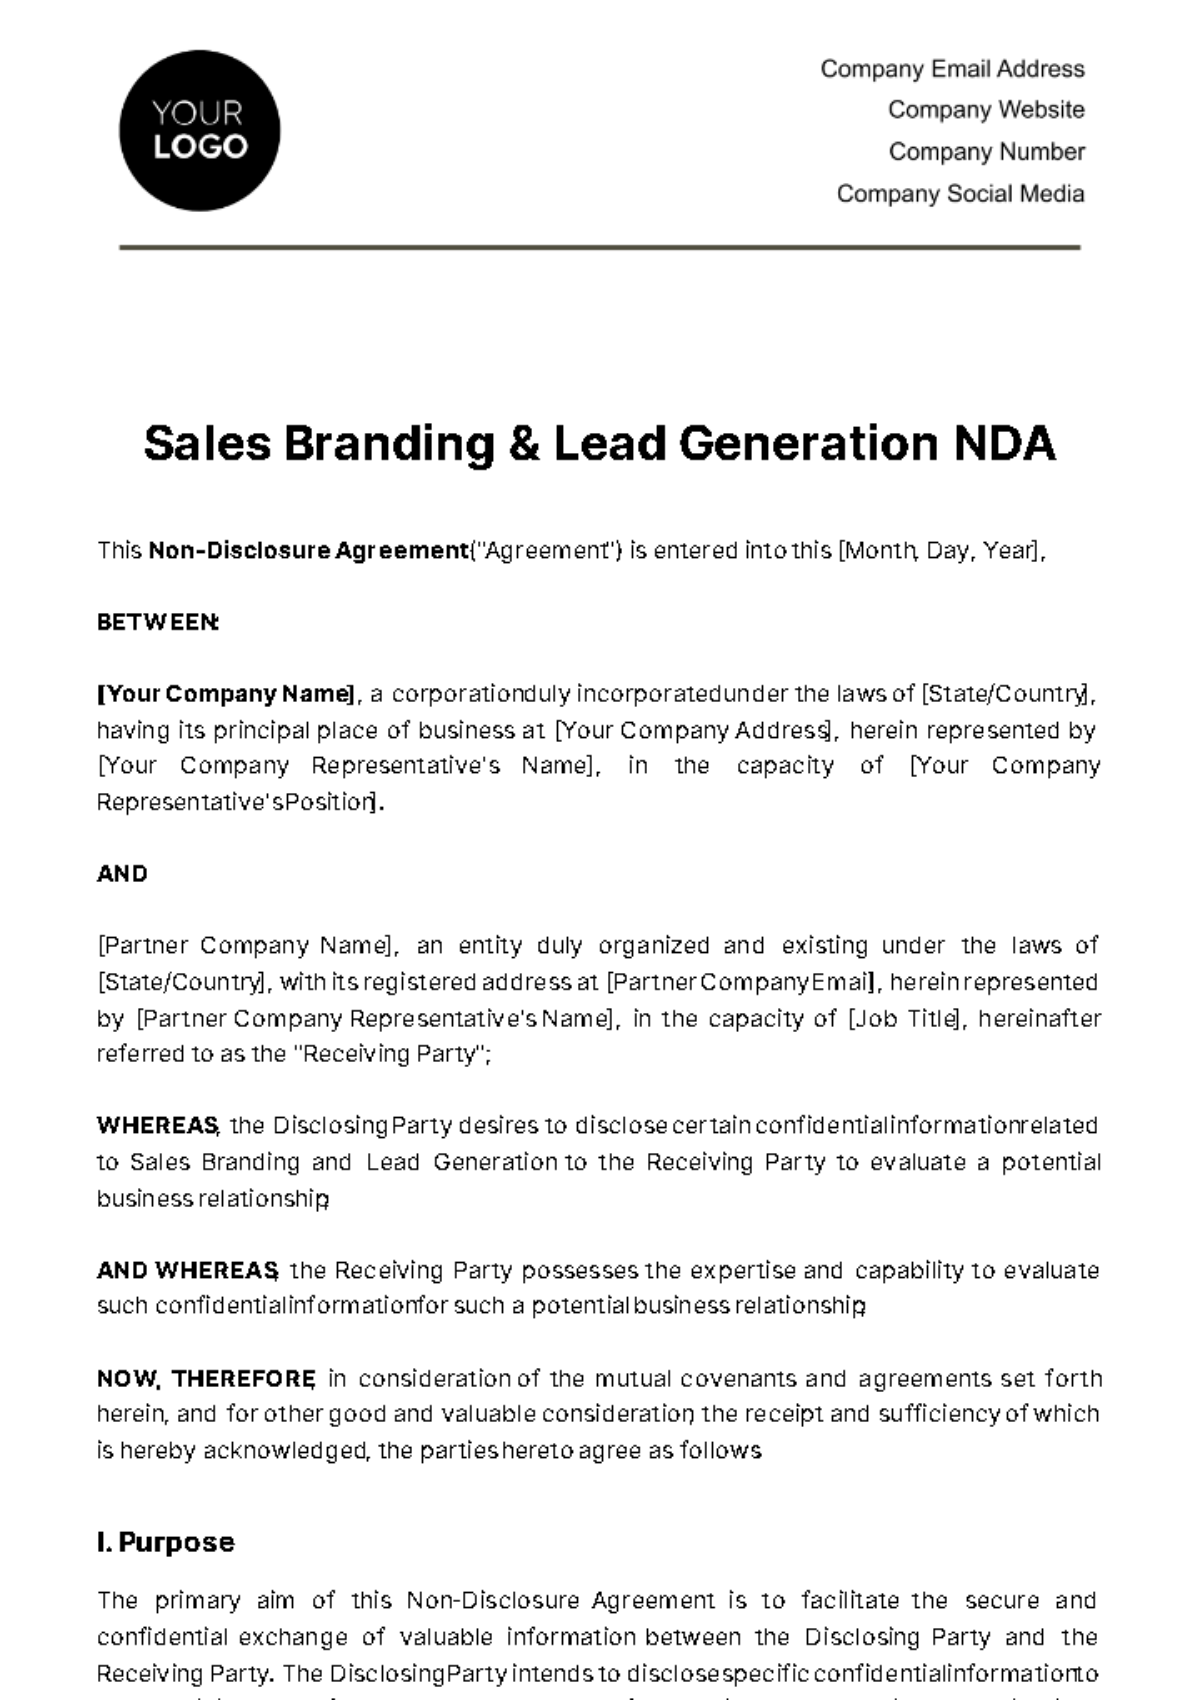 Free Sales Branding & Lead Generation NDA Template